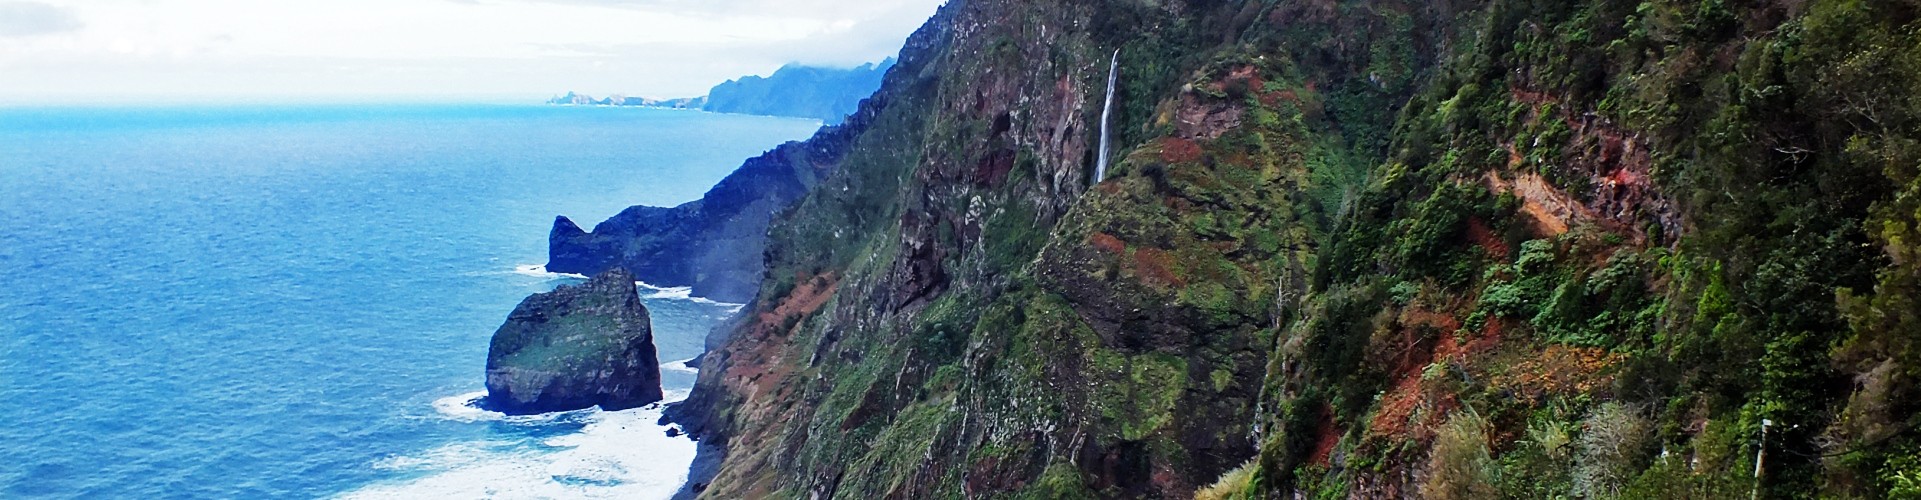 Rocha do Navio Nature Reserve in Santana, Madeira Island